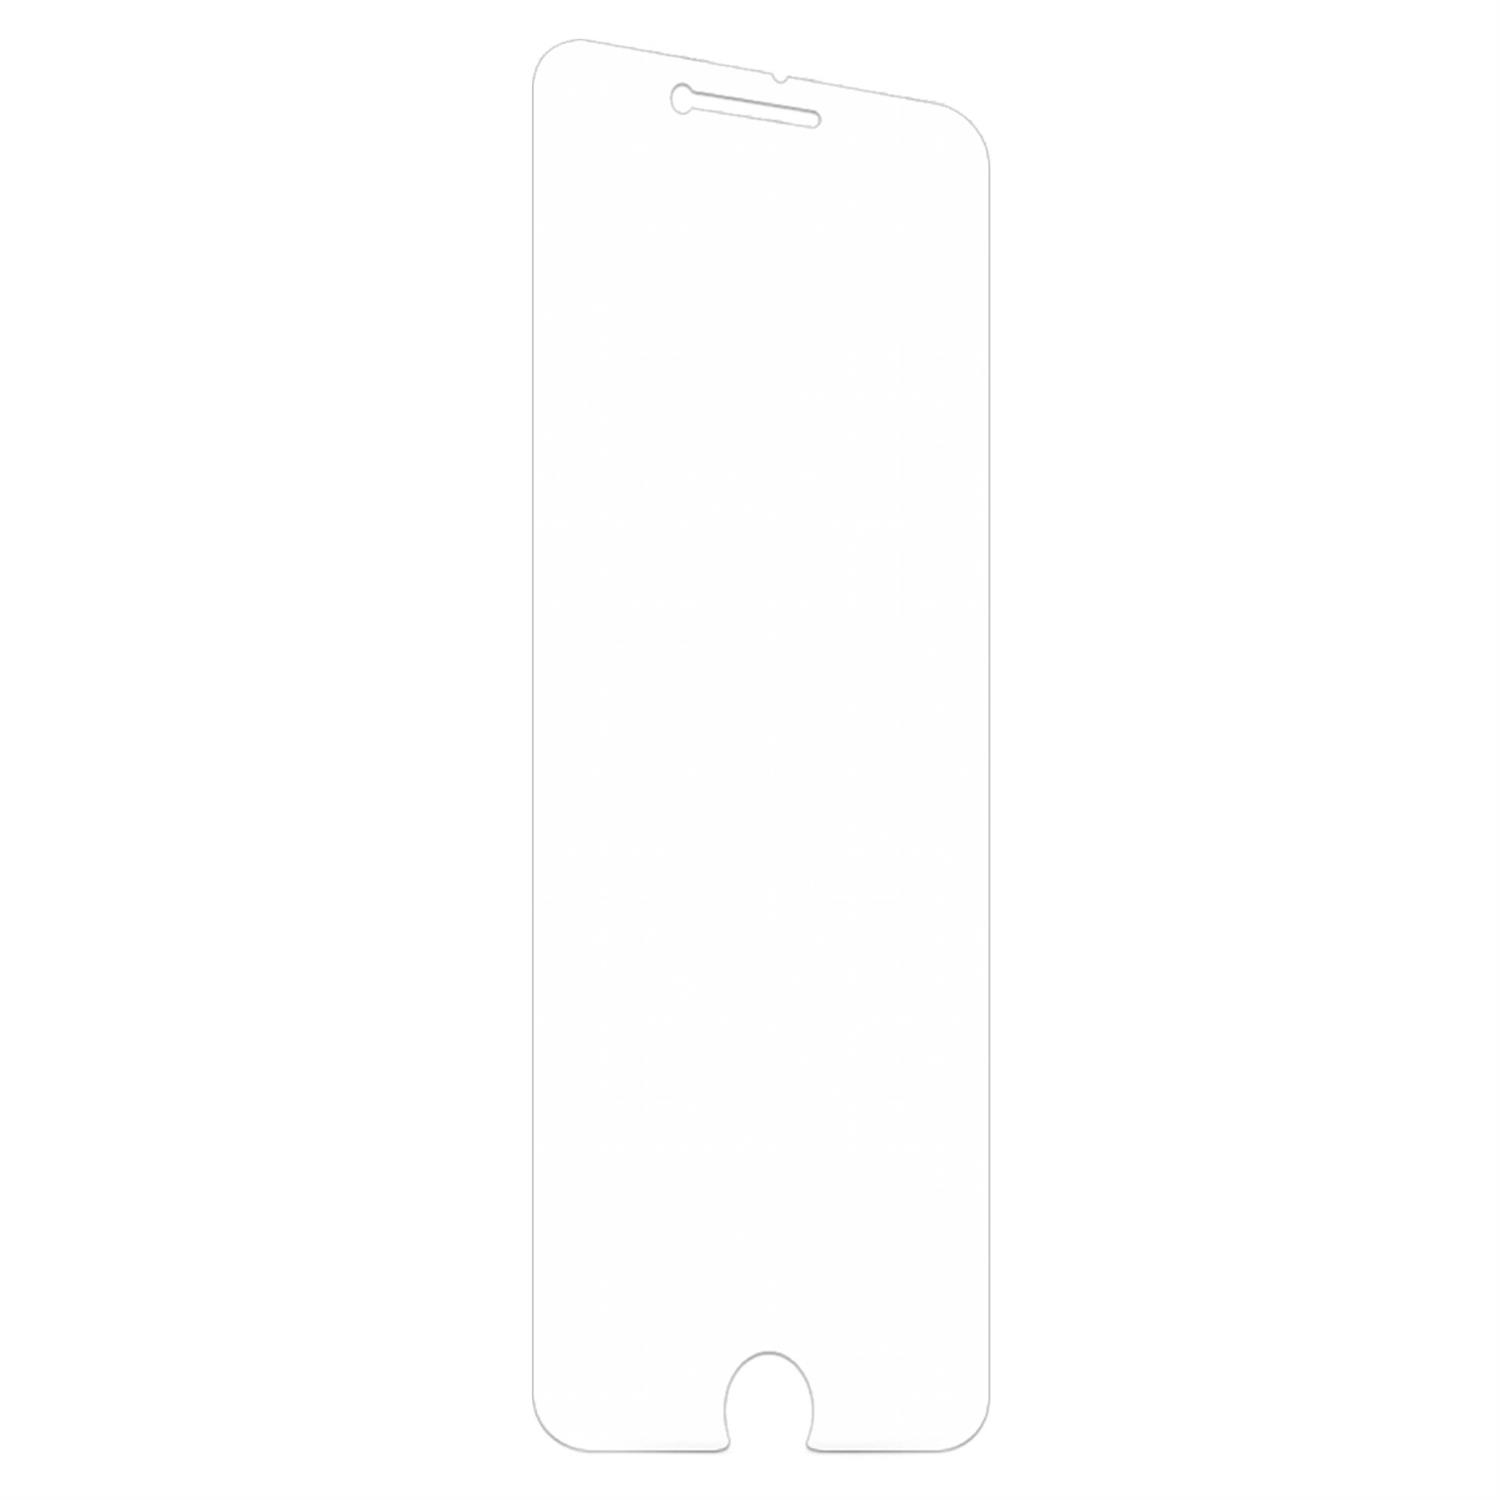 Woodcessories 2,5D Premium Clear Tempered Glass für Apple iPhone 7/8/SE (2020)